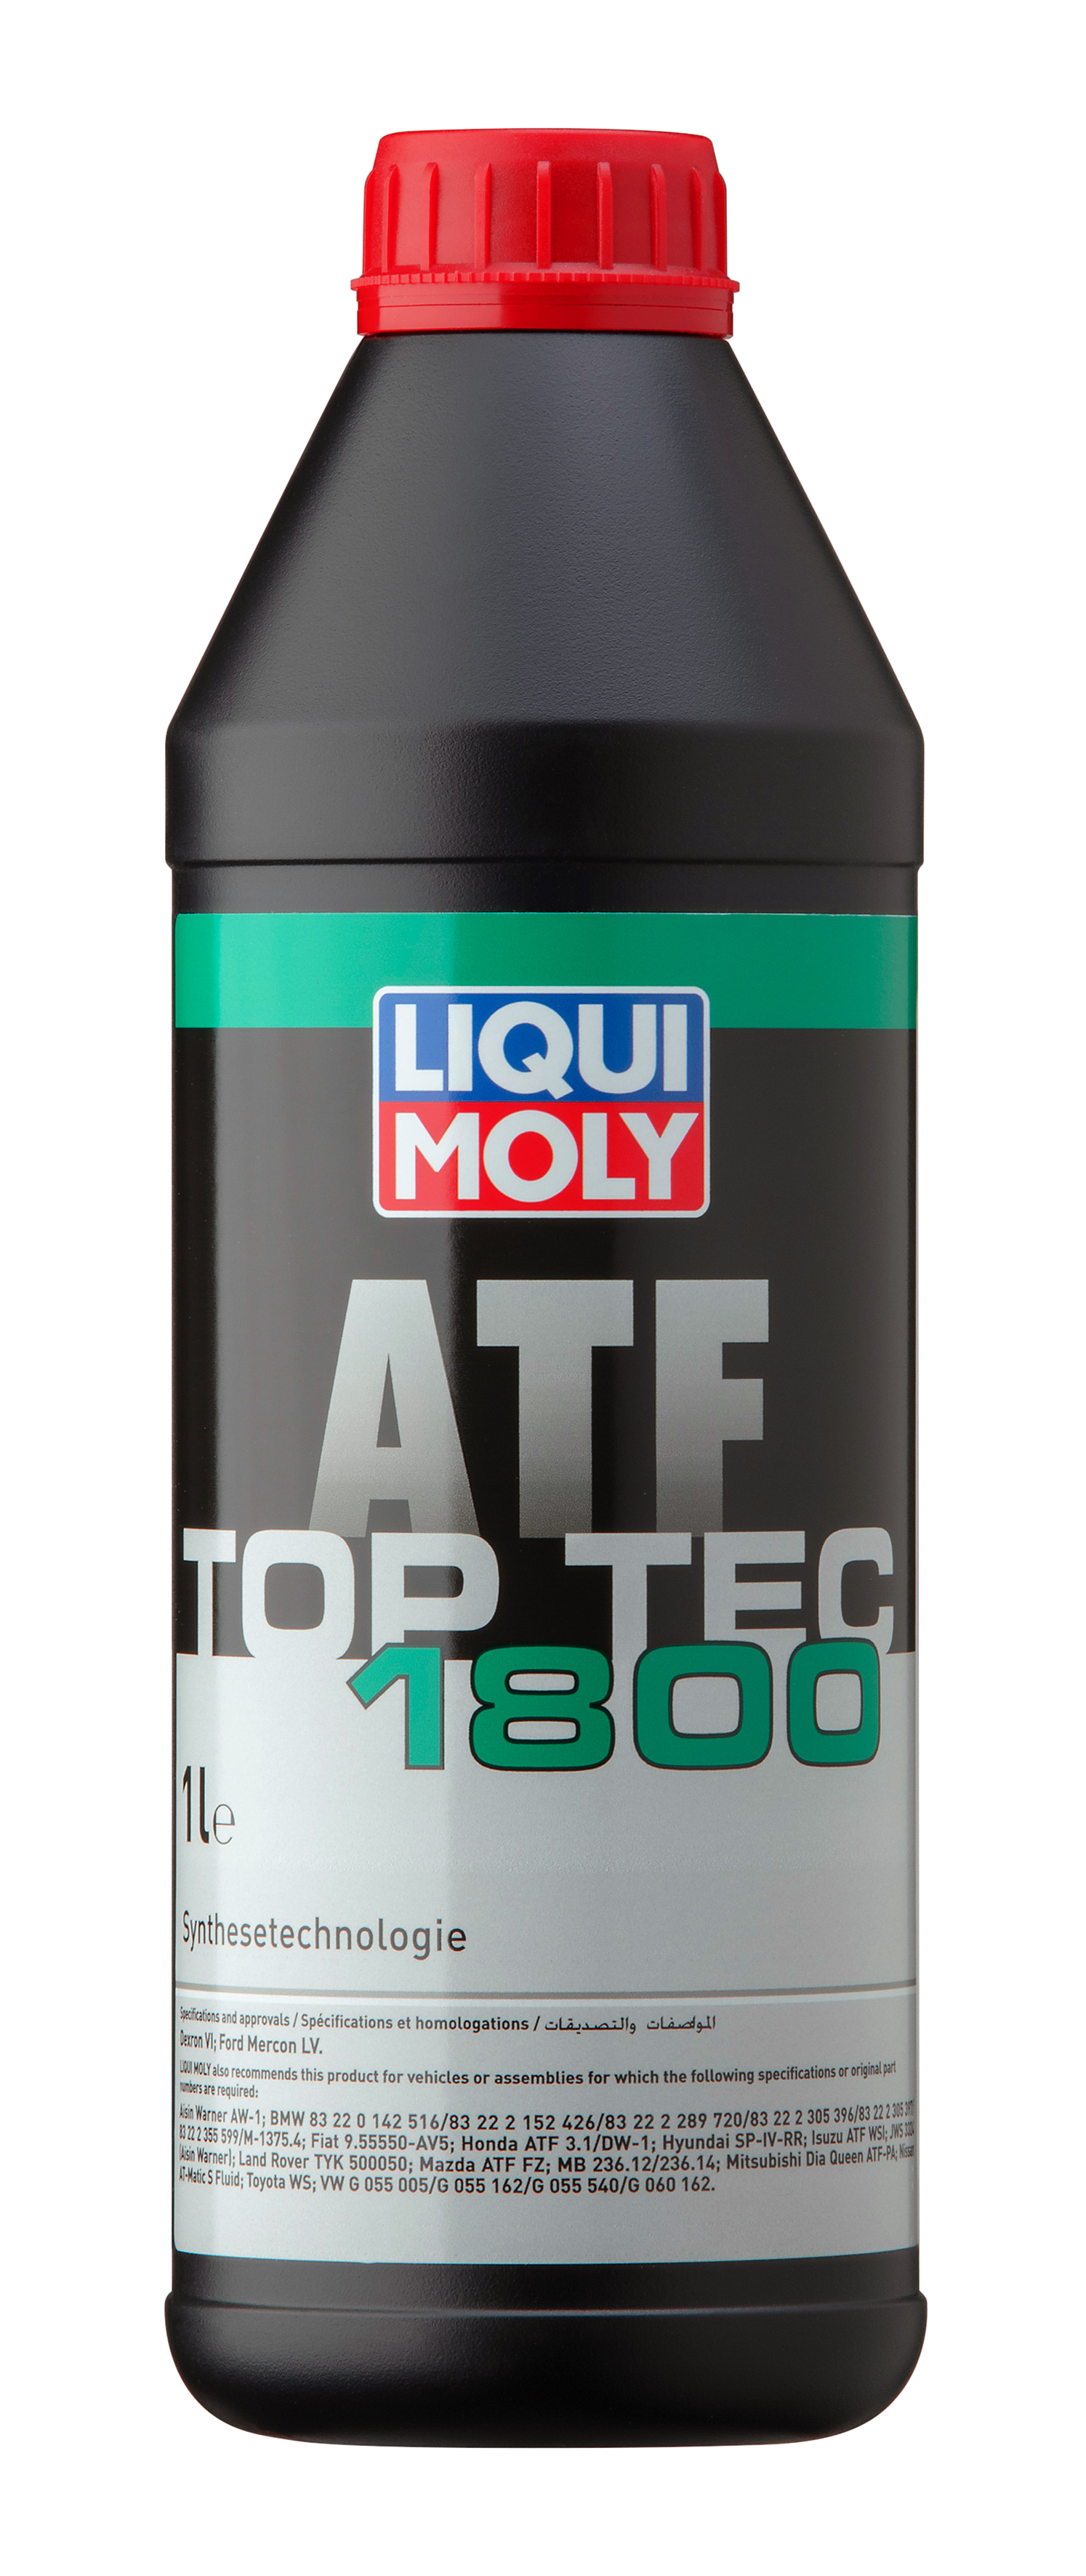 Top Tec ATF 1800